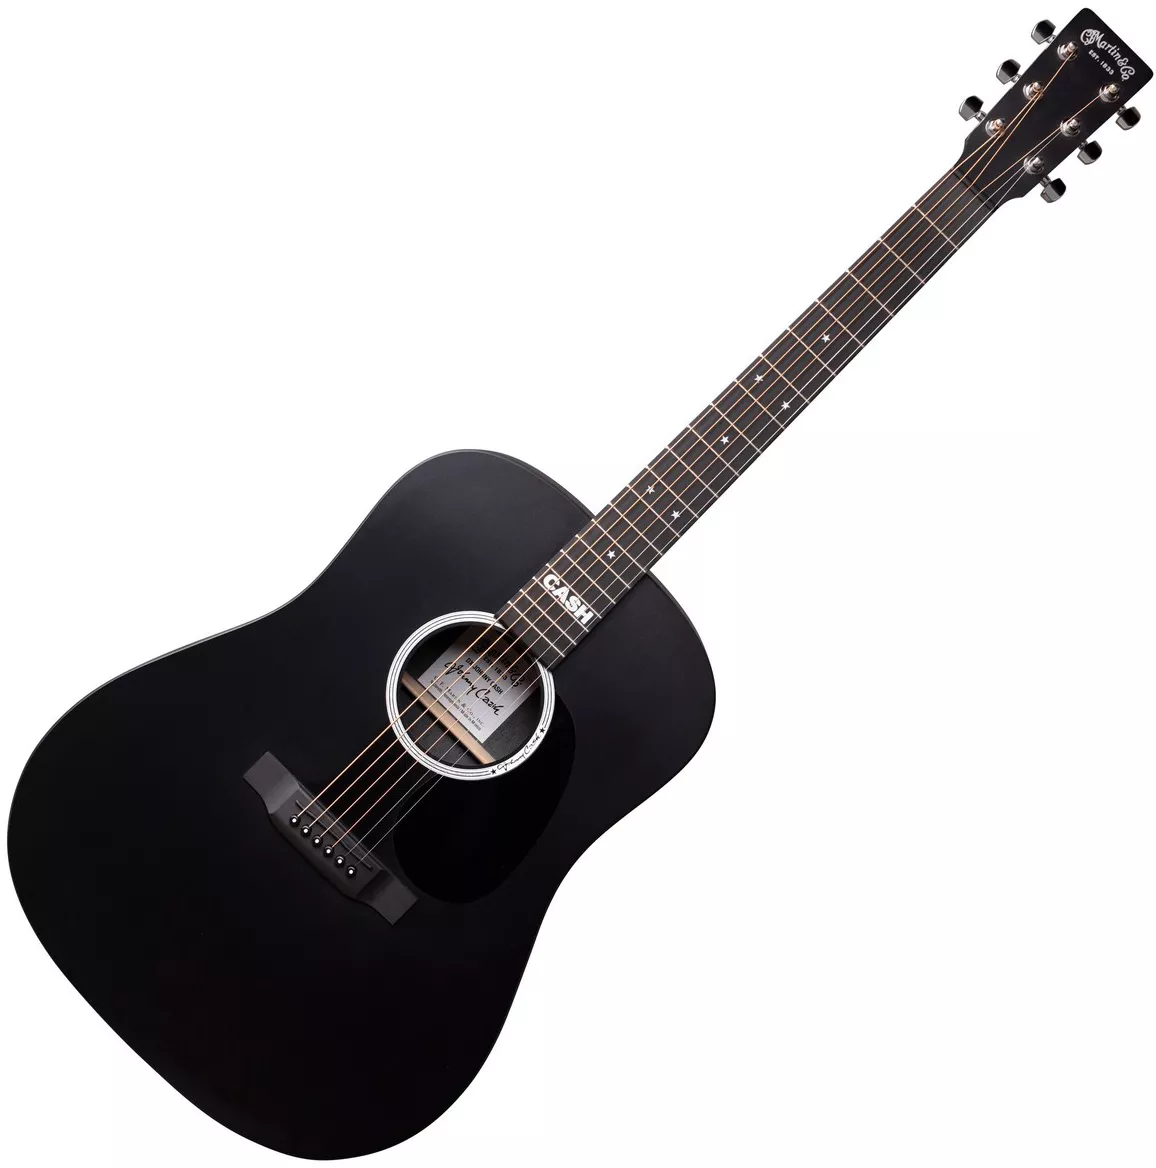 Martin Johnny Cash DX - black Electro acoustic guitar